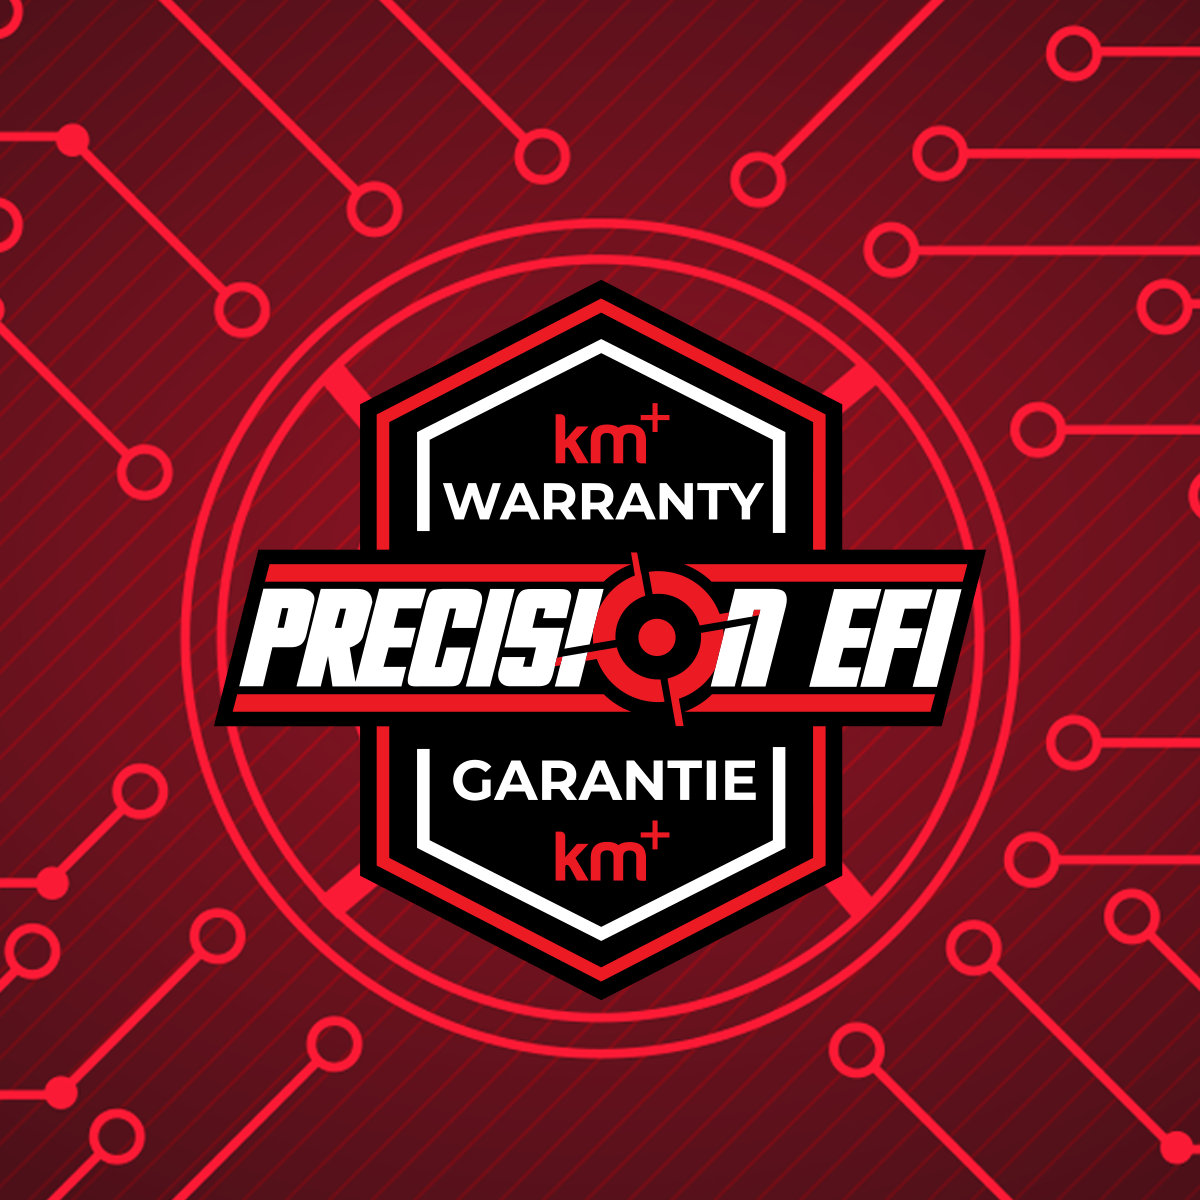 WARRANTY - Mountain Max 21+ - Precision EFI